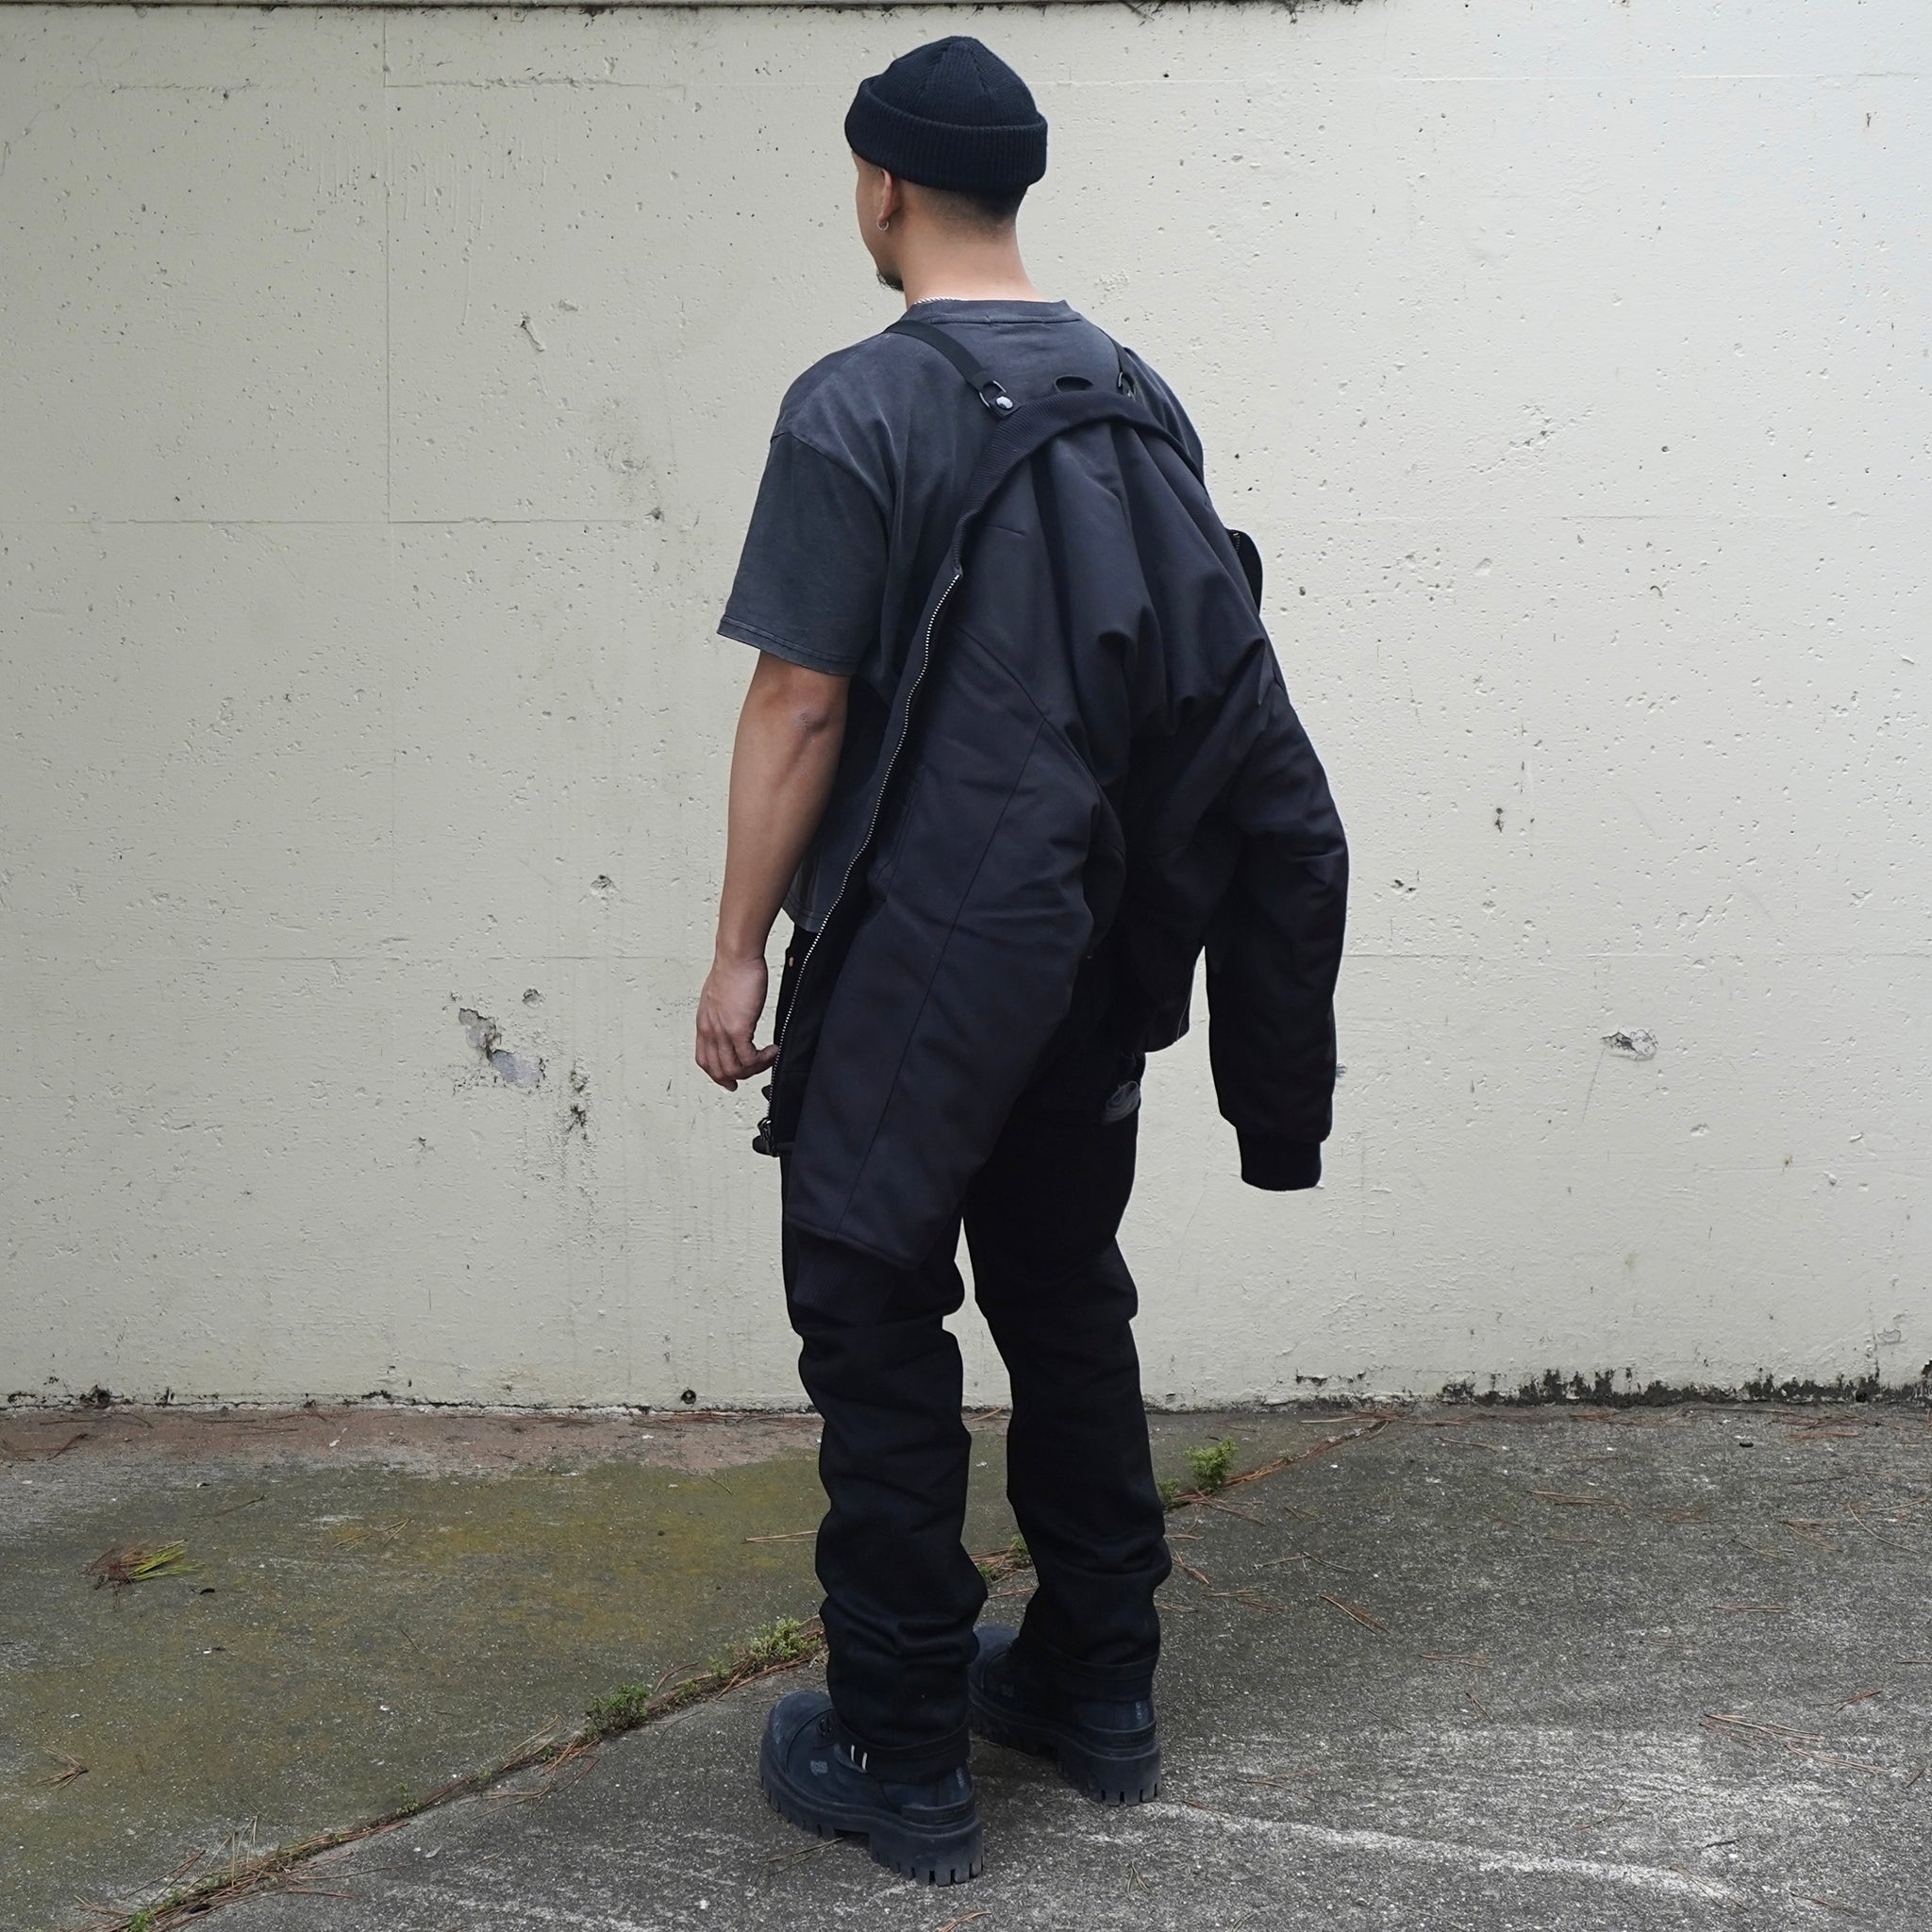 Obsidian Bomber (backpack)